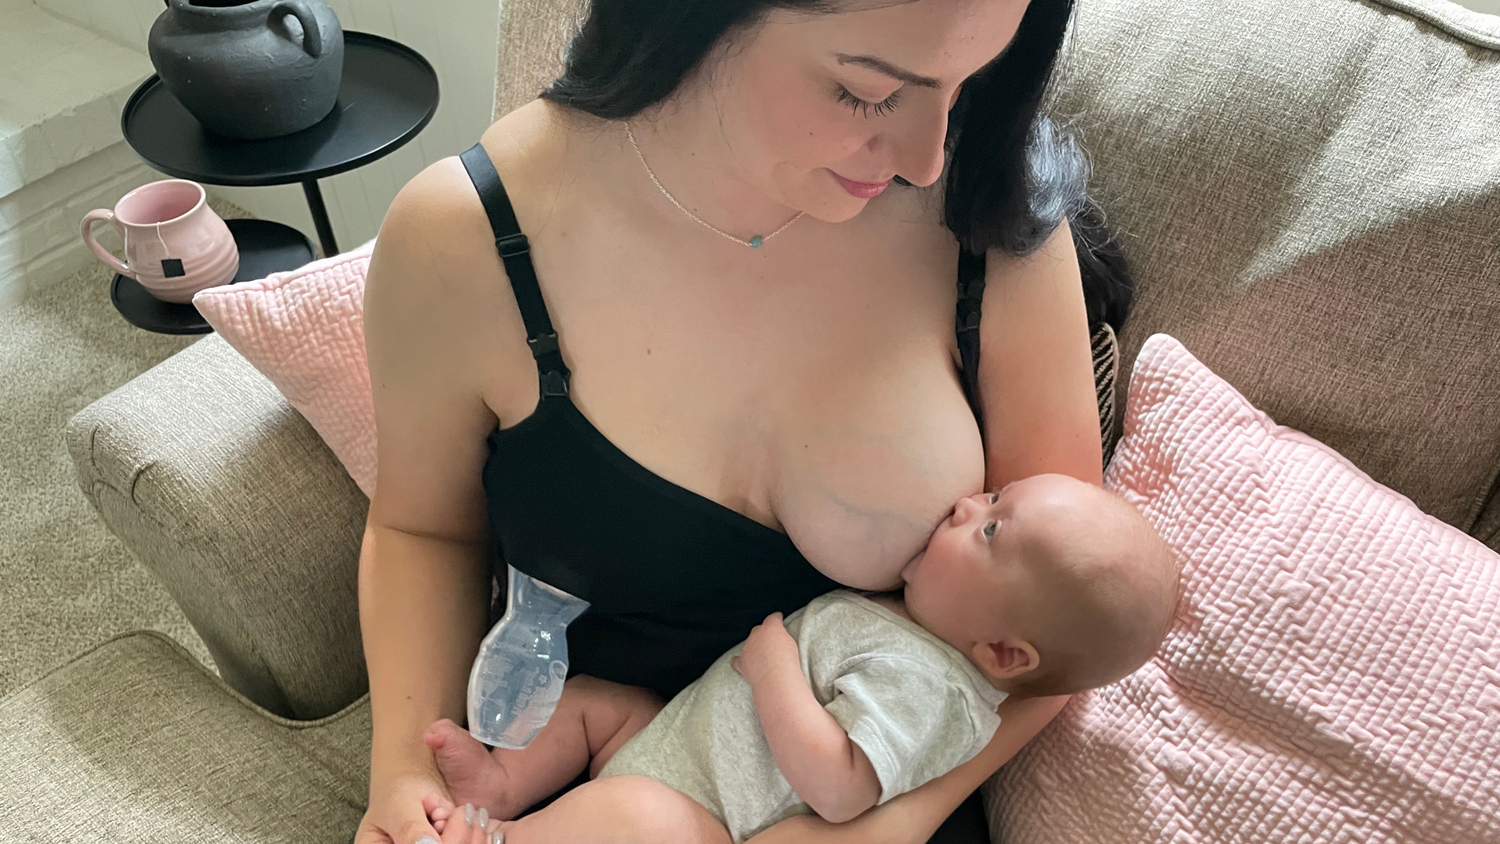 Breastfeeding Support Resources